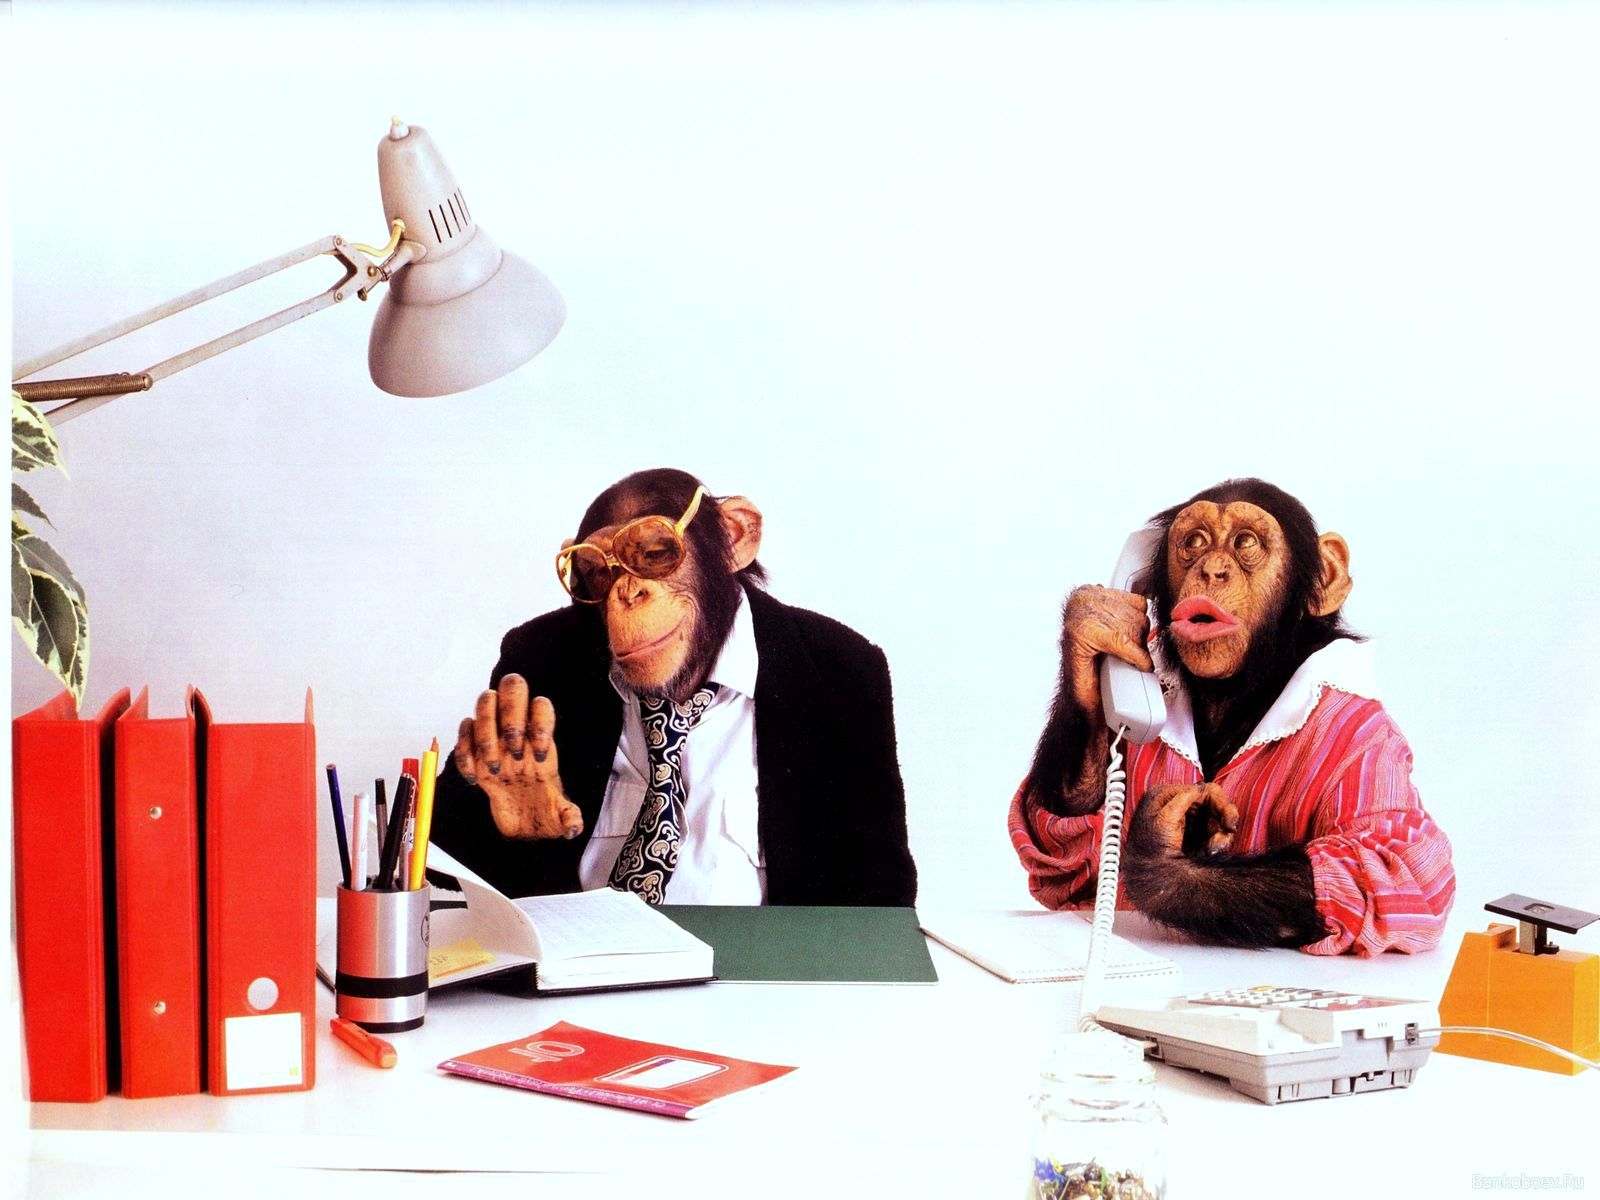 Baixar papel de parede para celular de Macaco, Animal, Humor gratuito.